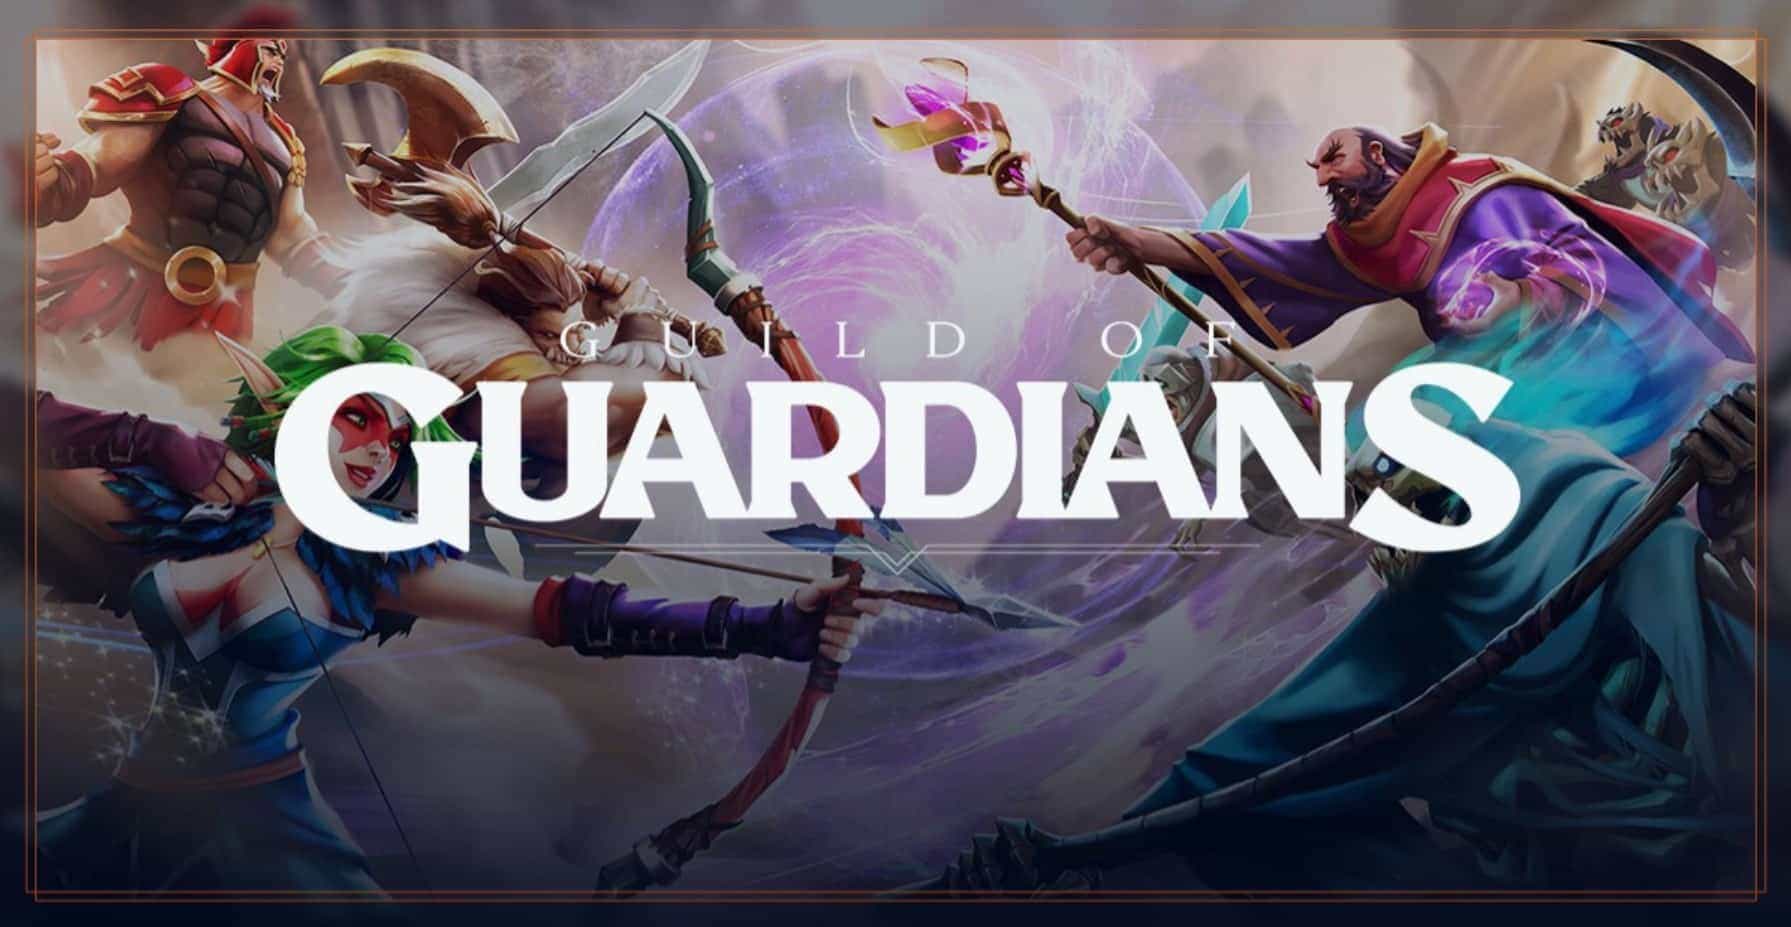 Guild of guardians main screen